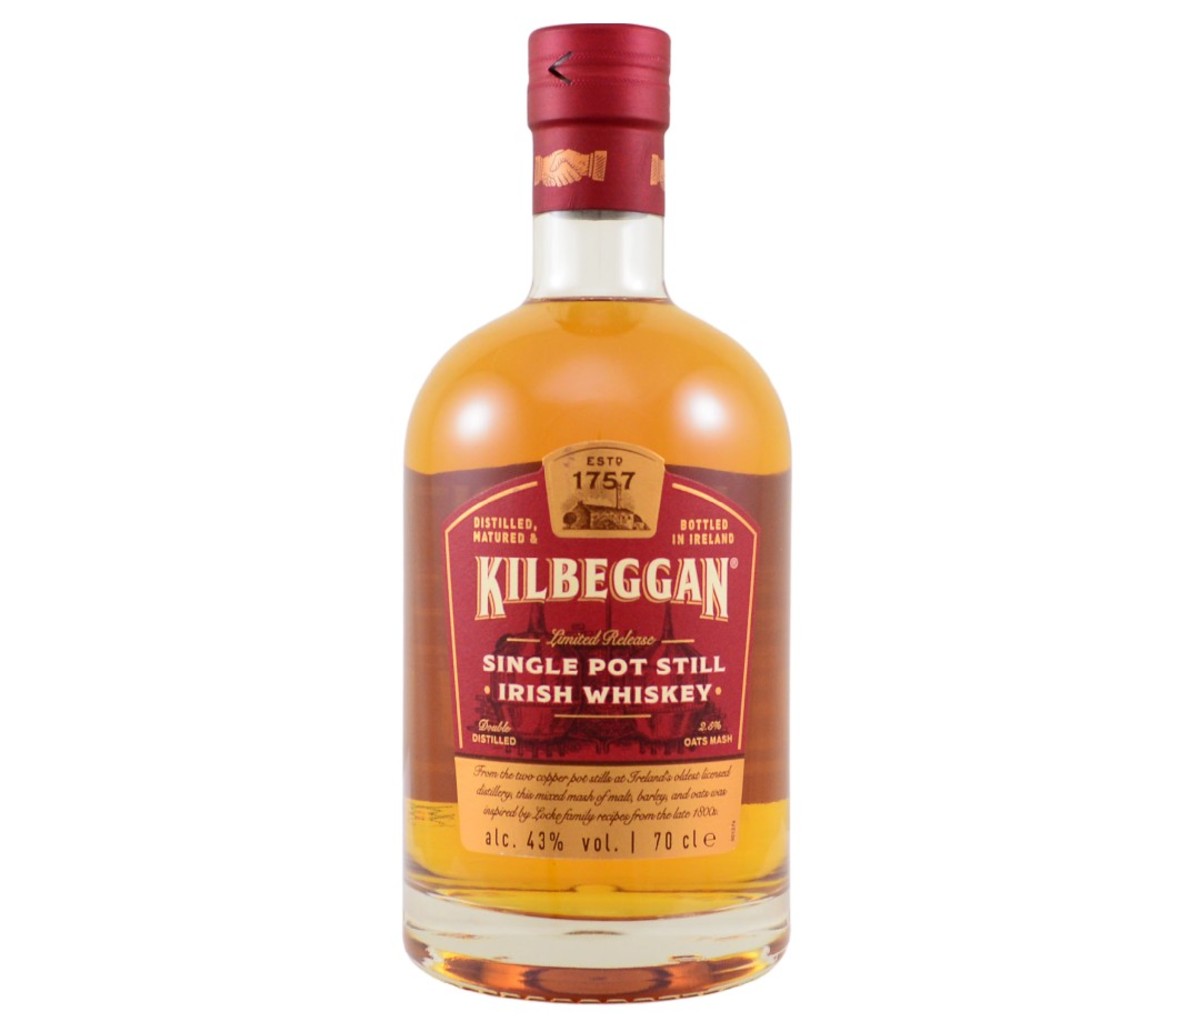 Bottle of Kilbeggan Single Pot Still Irish Whiskey